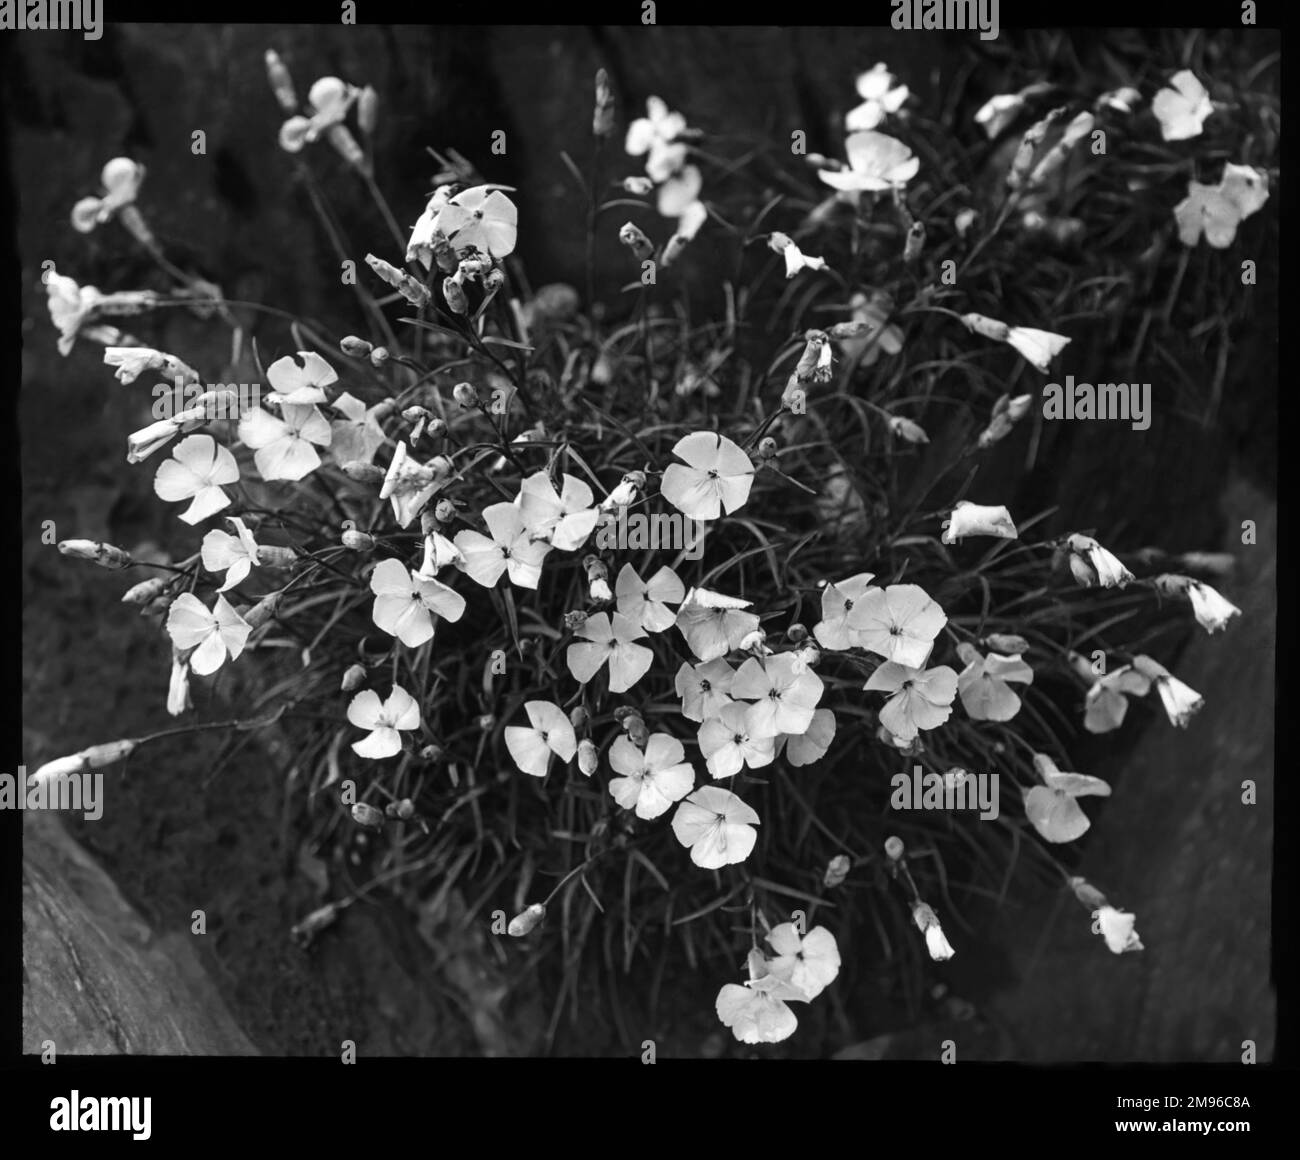 Dianthus Frigidus, pianta fiorita della famiglia delle Caryophyllaceae con fiori viola pallido. Foto Stock